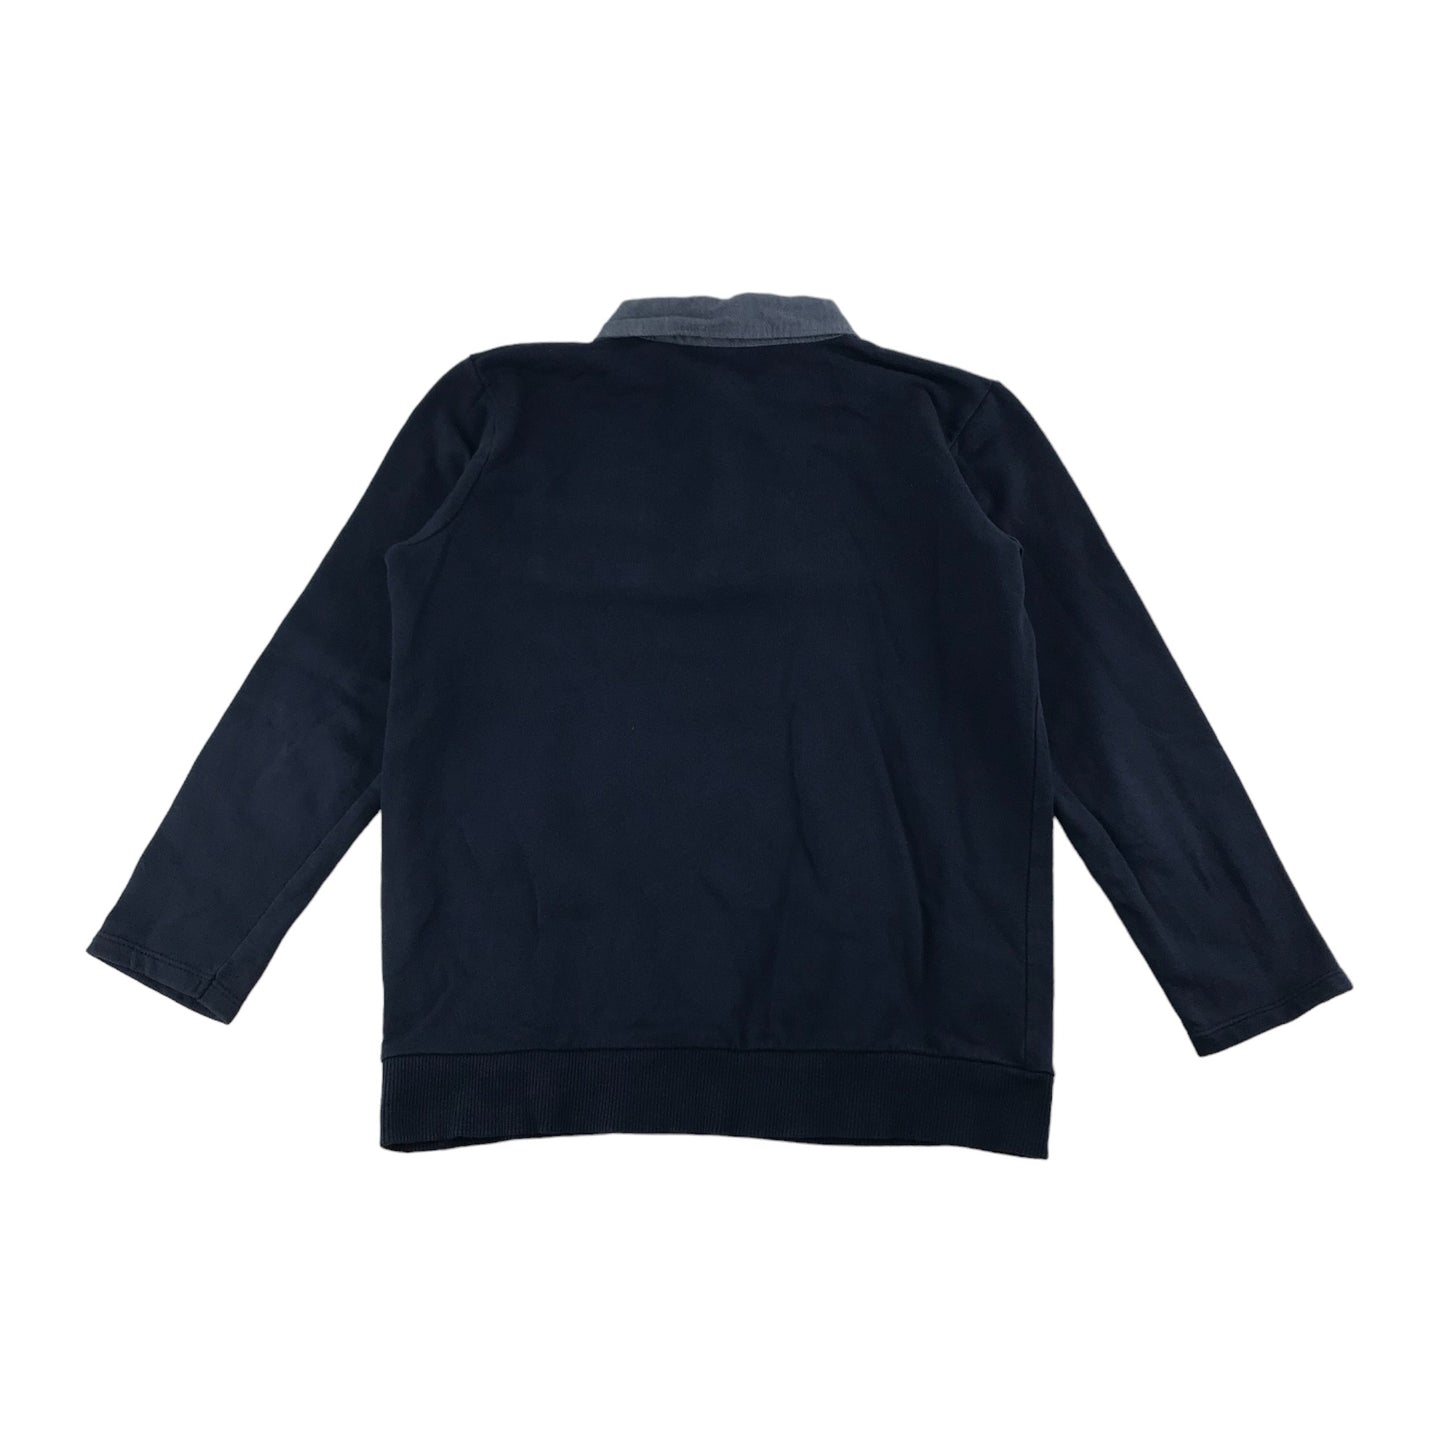 George x Billie Polo Shirt Age 7 Navy Long Sleeve Plain Grey Collar Sweater